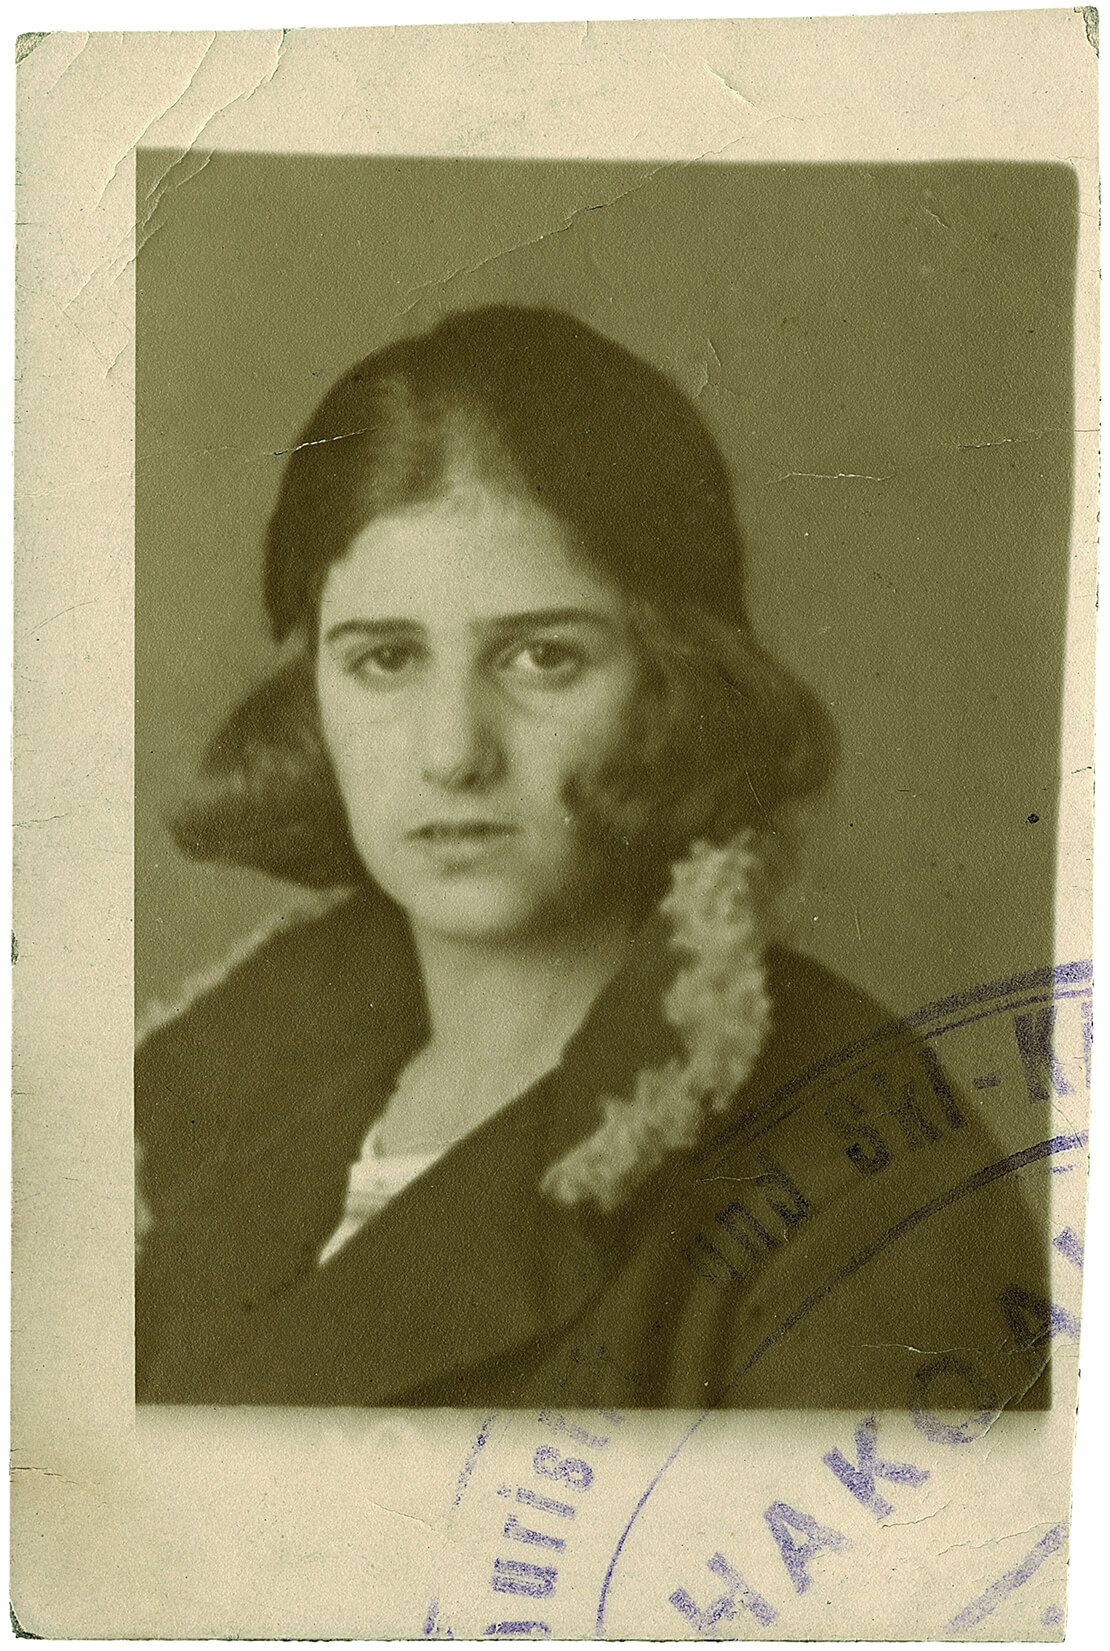 Porträtfoto Lily Calderon-Spitz mit dem Stempel des Sportvereins Hakoah, Theatermuseum Wien 